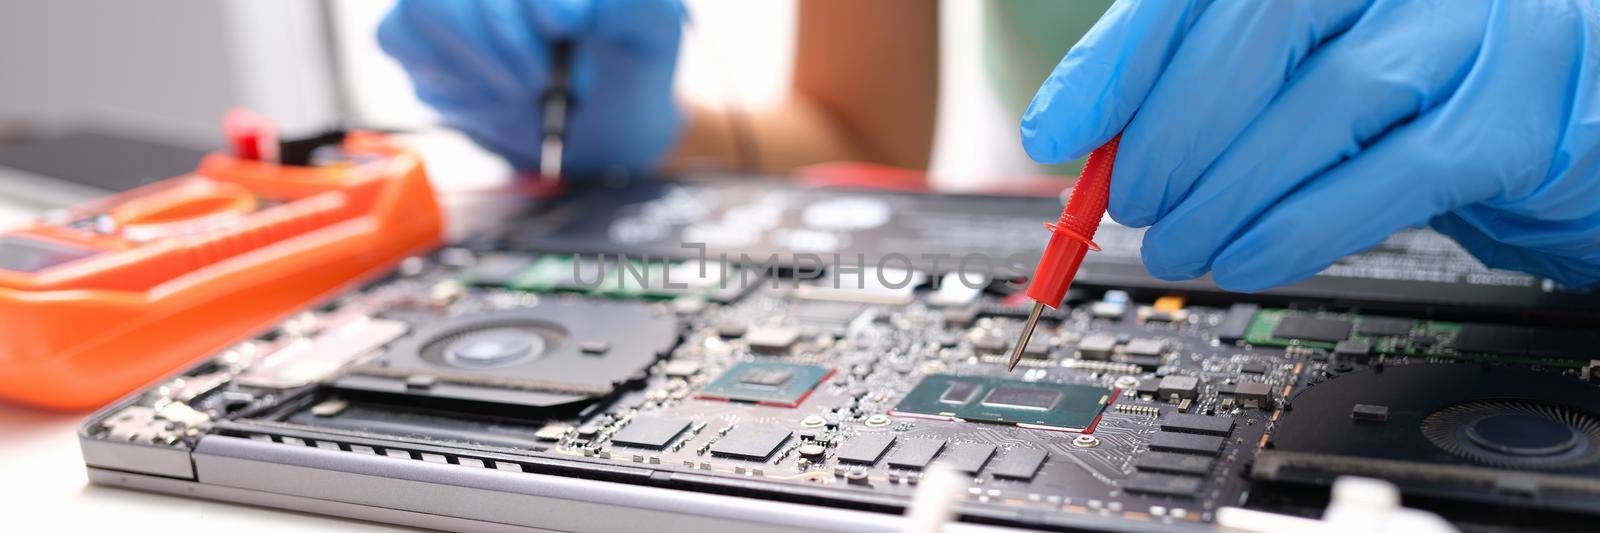 Laptop repair, gloved hands holding a voltage meter for electronics. Processor testing, diagnostics motherboard